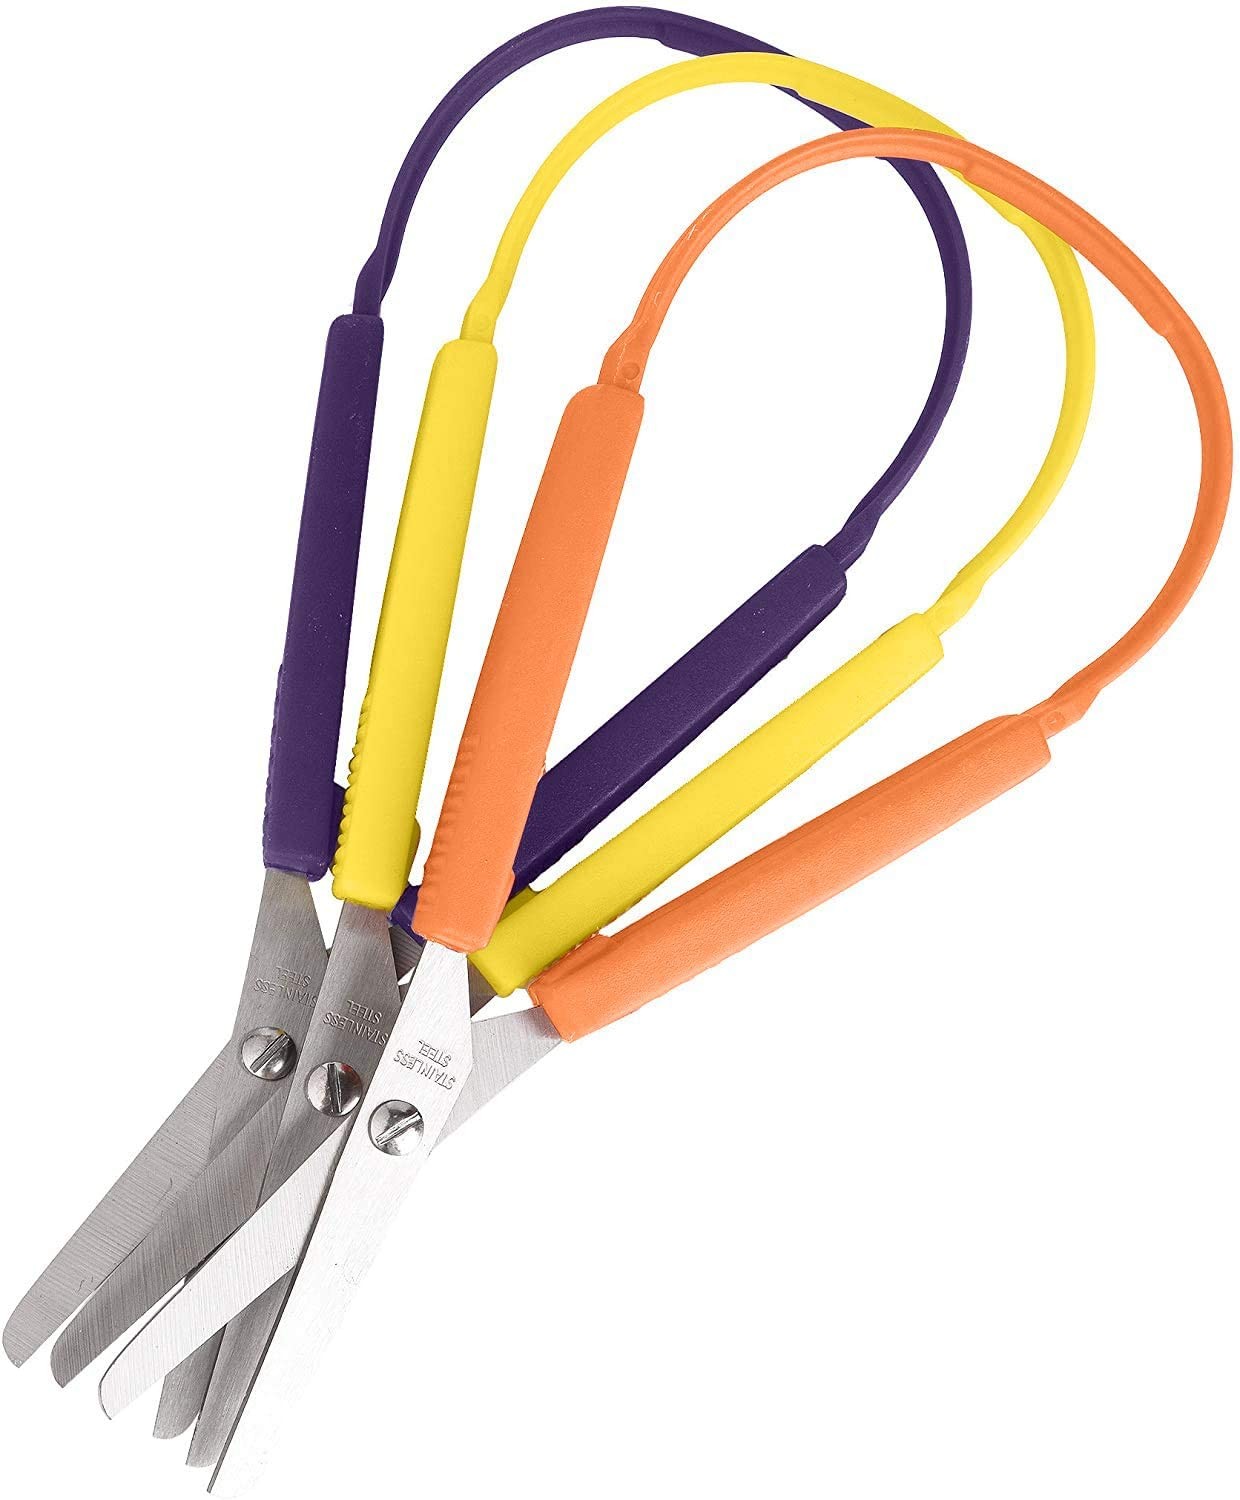 Mini Stainless Steel Loop Scissors Adaptive Design Colorful Grip Scissor  DIY Art Craft Cutting Tool